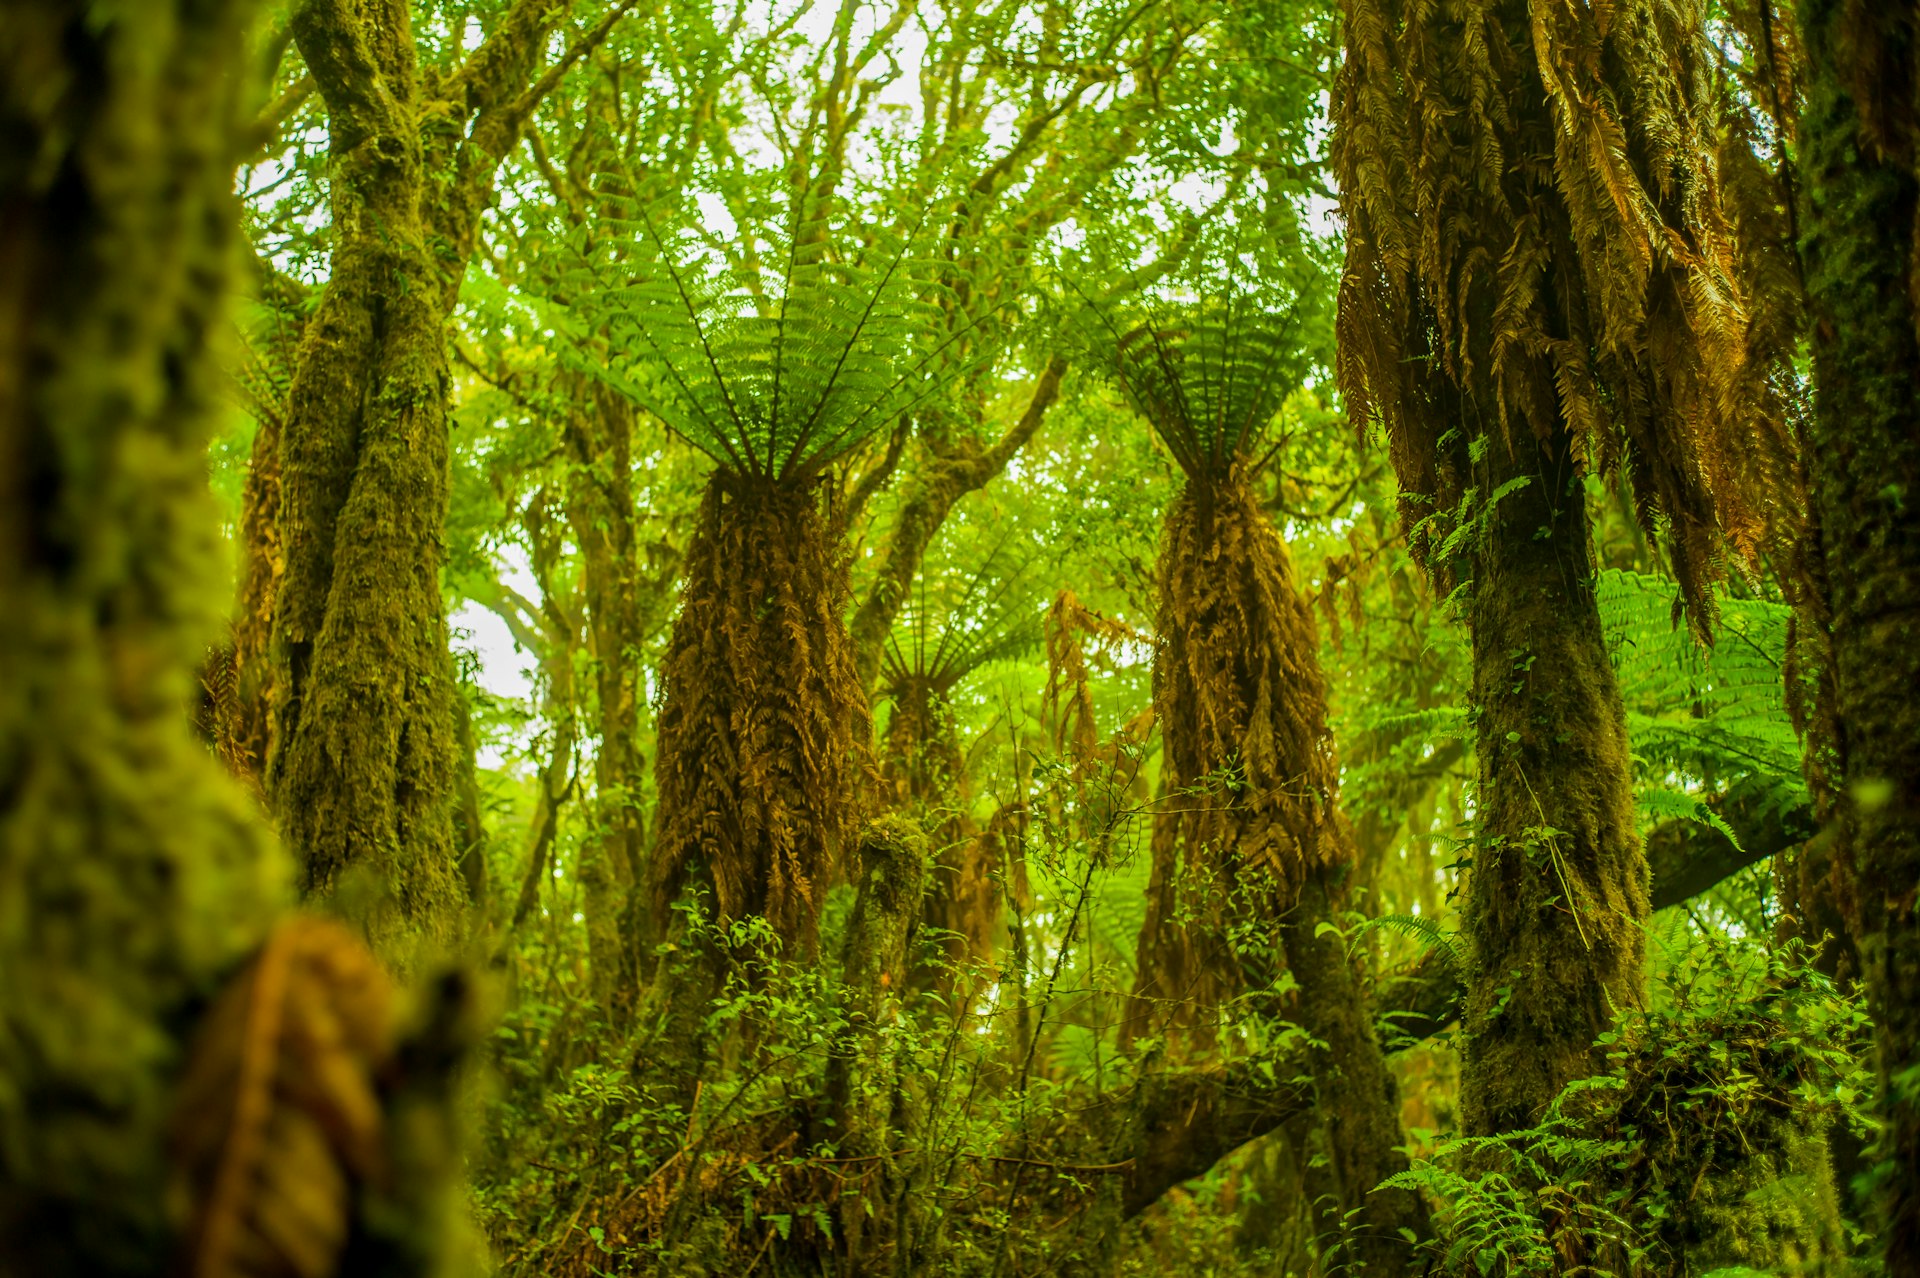 A forest of giant green ferns in Samaipata, Santa Cruz, Bolivia, South America